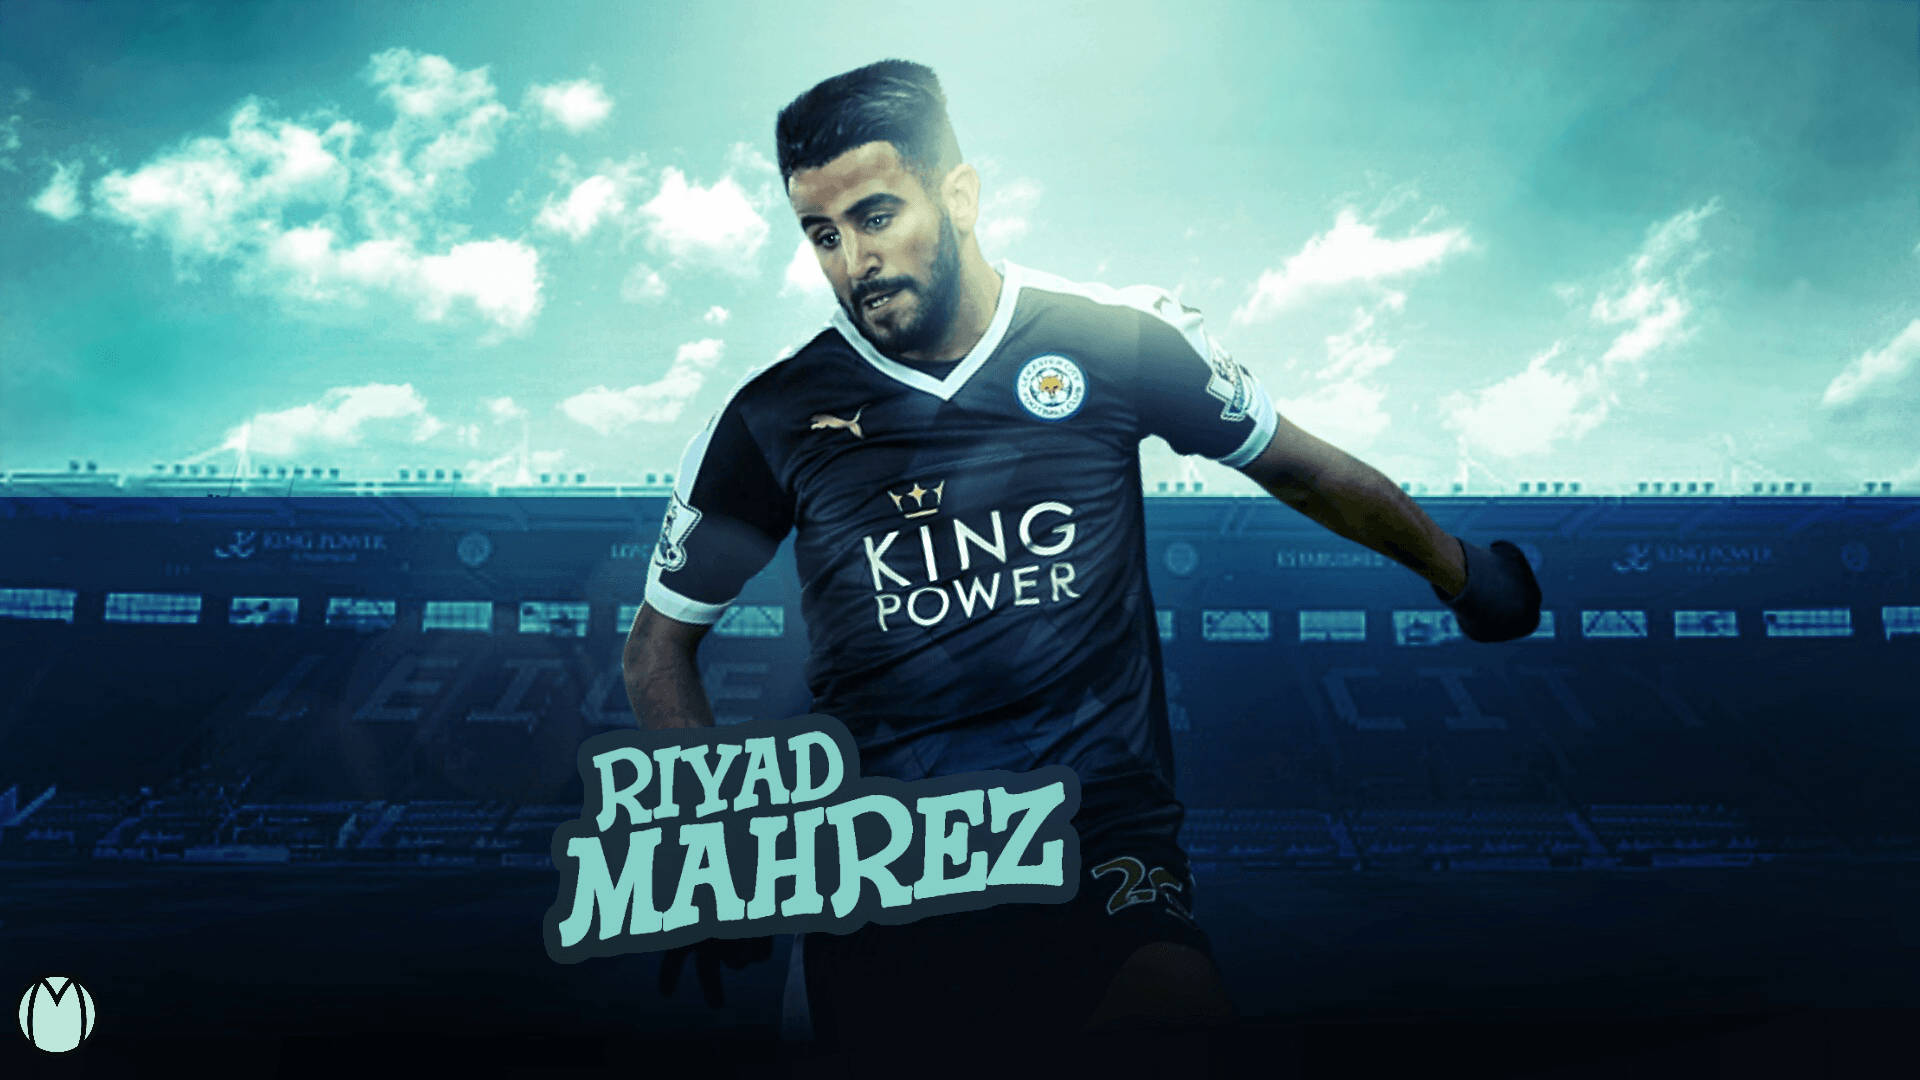 Leicestercity Riyad Mahrez (player's Name) Sfondo